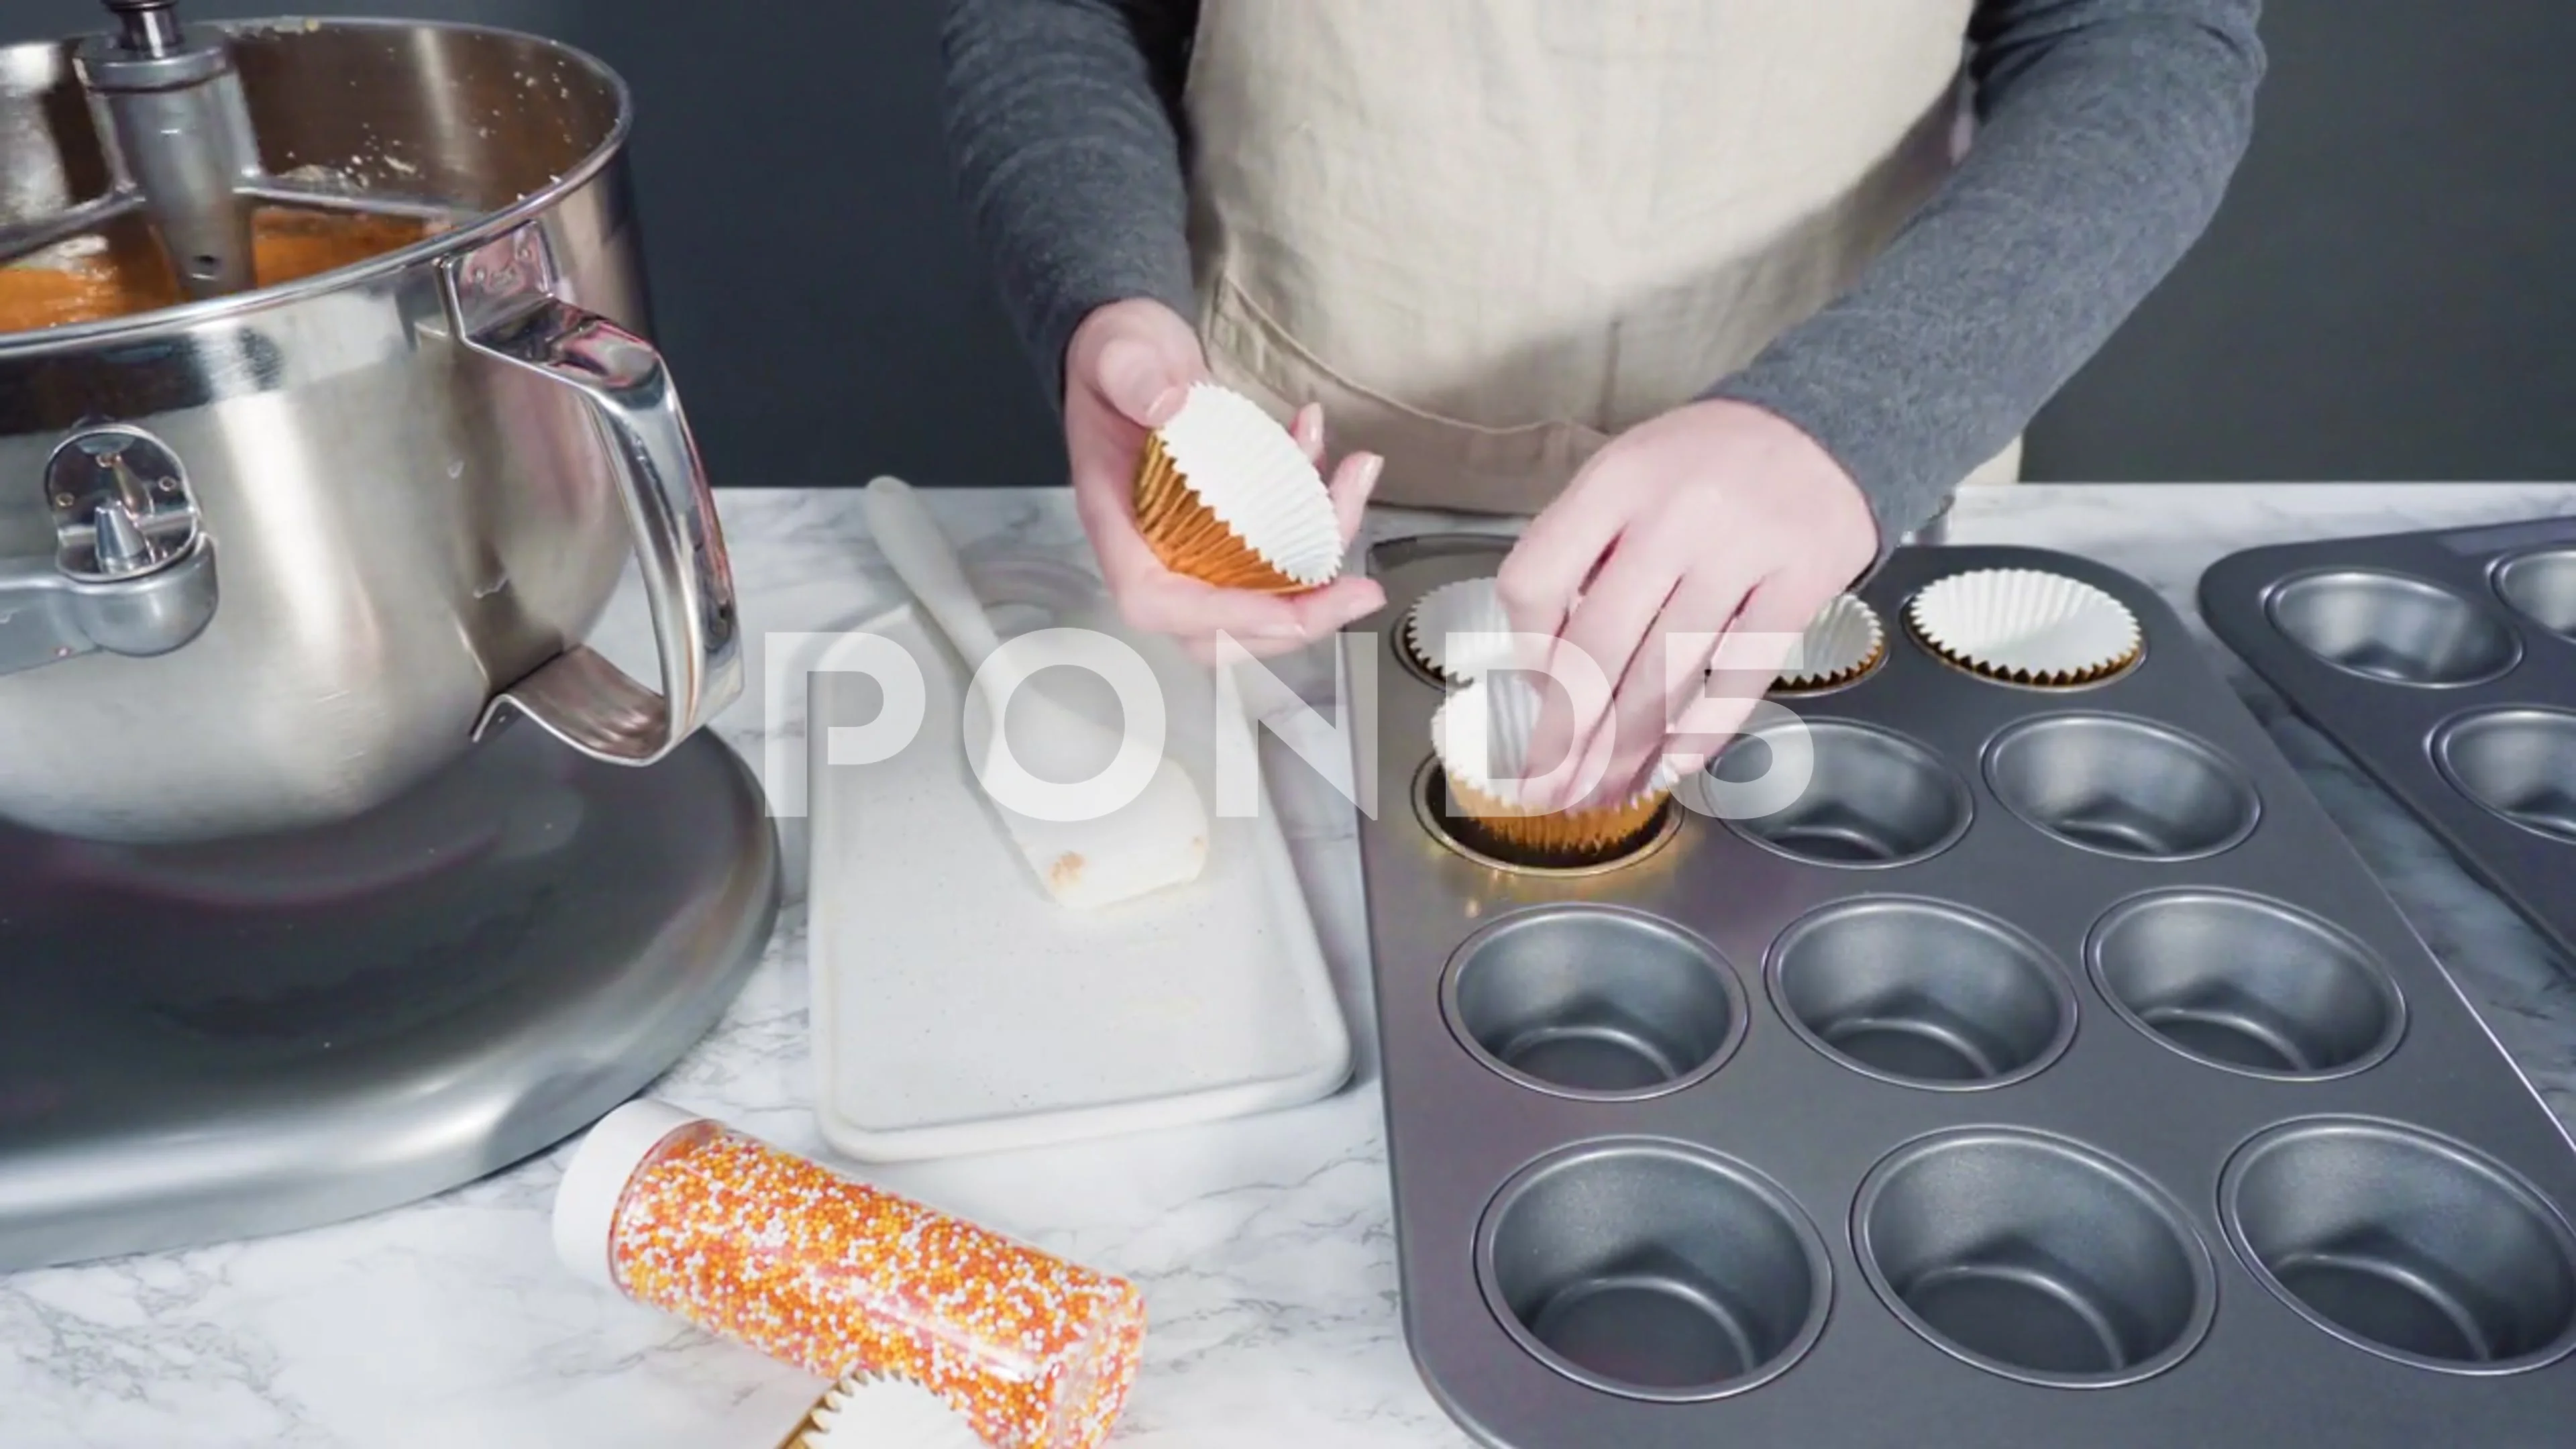 https://images.pond5.com/scooping-pumpkin-spice-cupcake-batter-footage-169536848_prevstill.jpeg